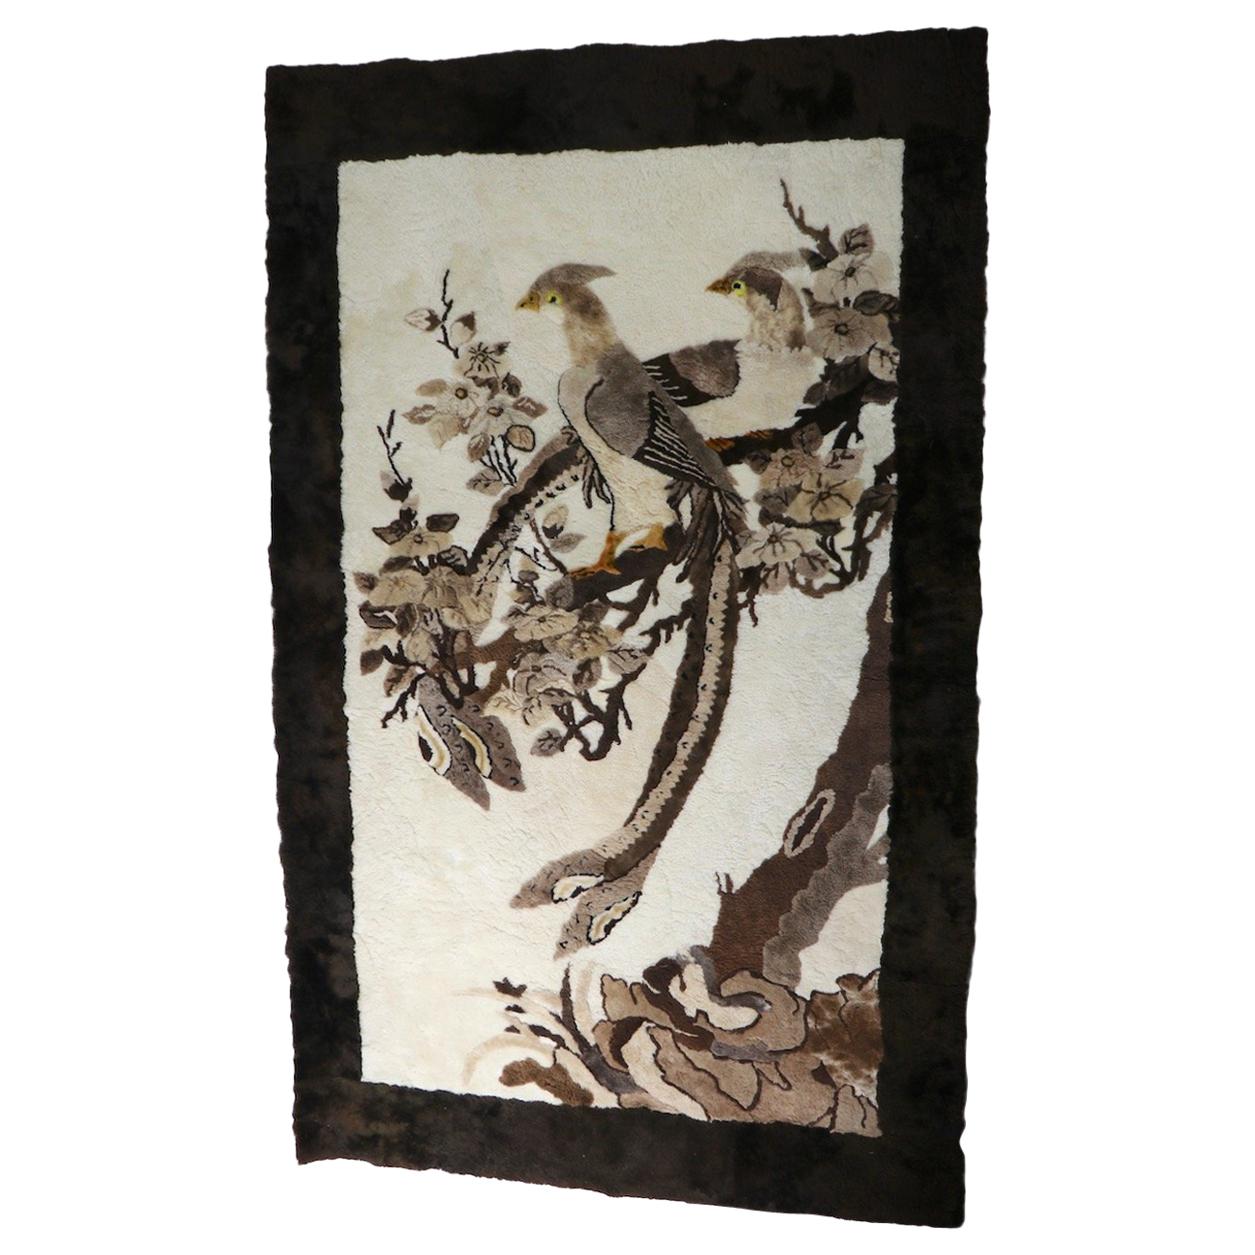 Sculpted Animal Skin Rug Depicting Bird of Paradise